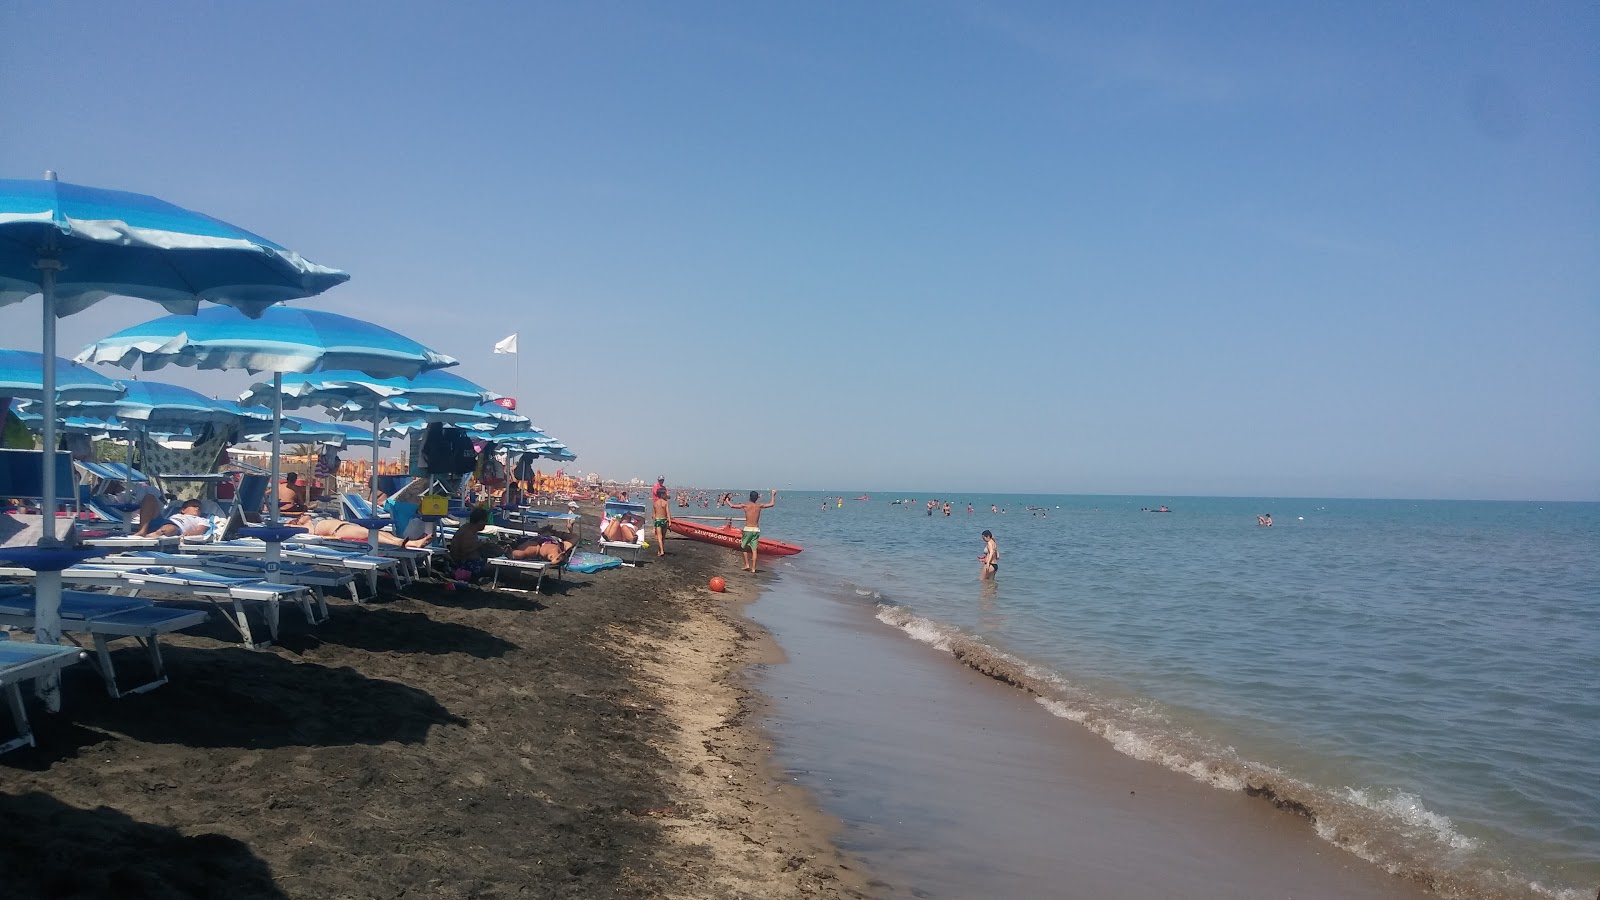 Foto de Margherita di Savoia área de resort de praia